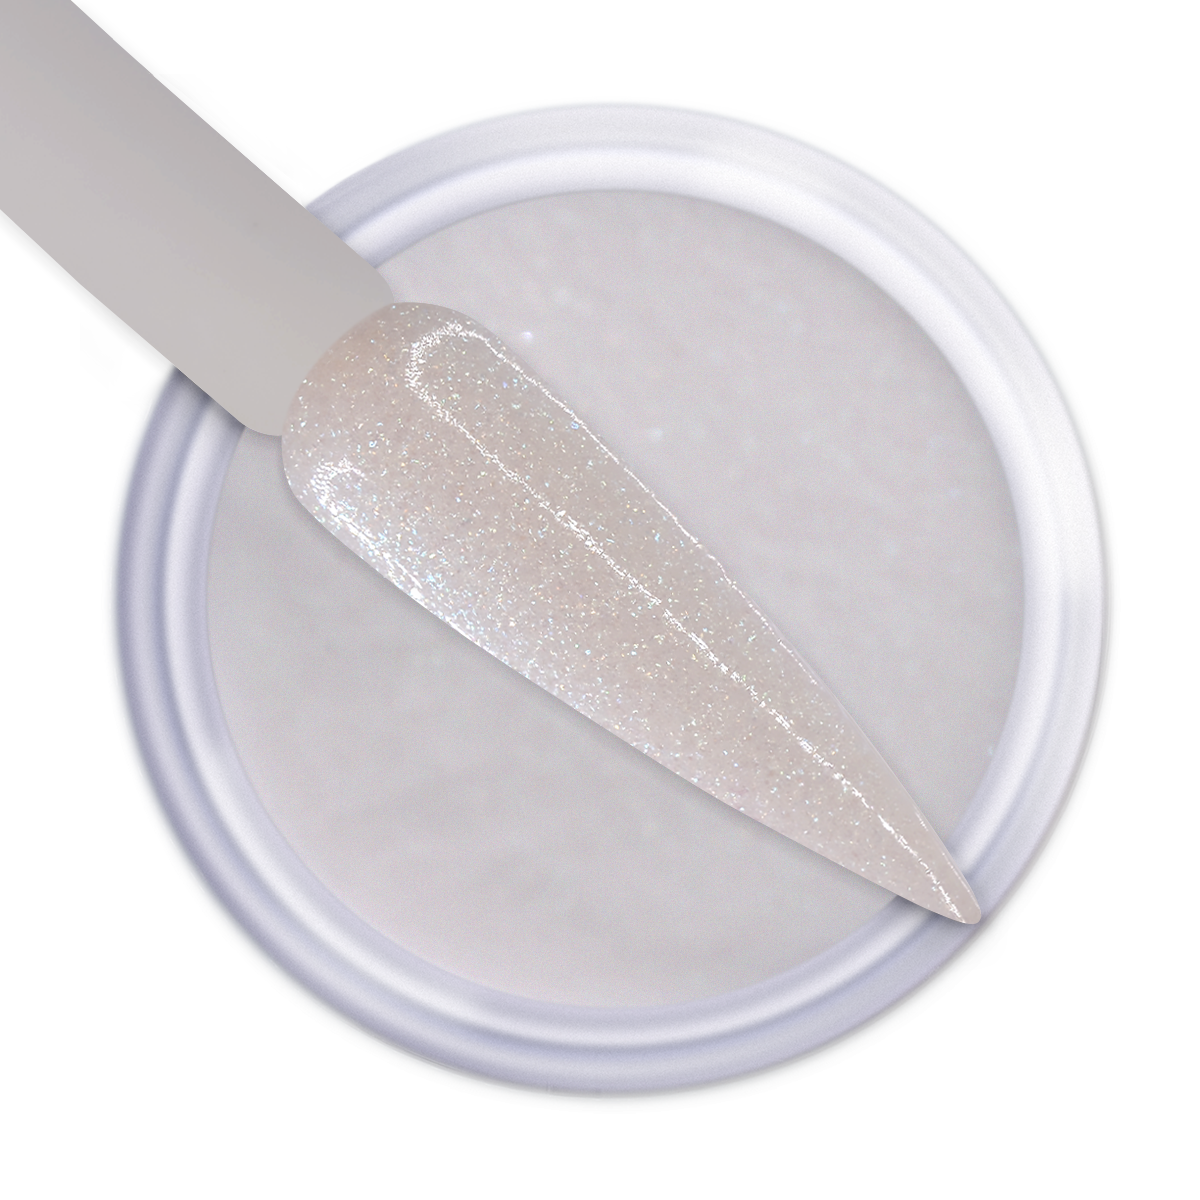 How to Apply Mermaid Nail Powder for a Pretty Chrome Finish – Fairy Glamor